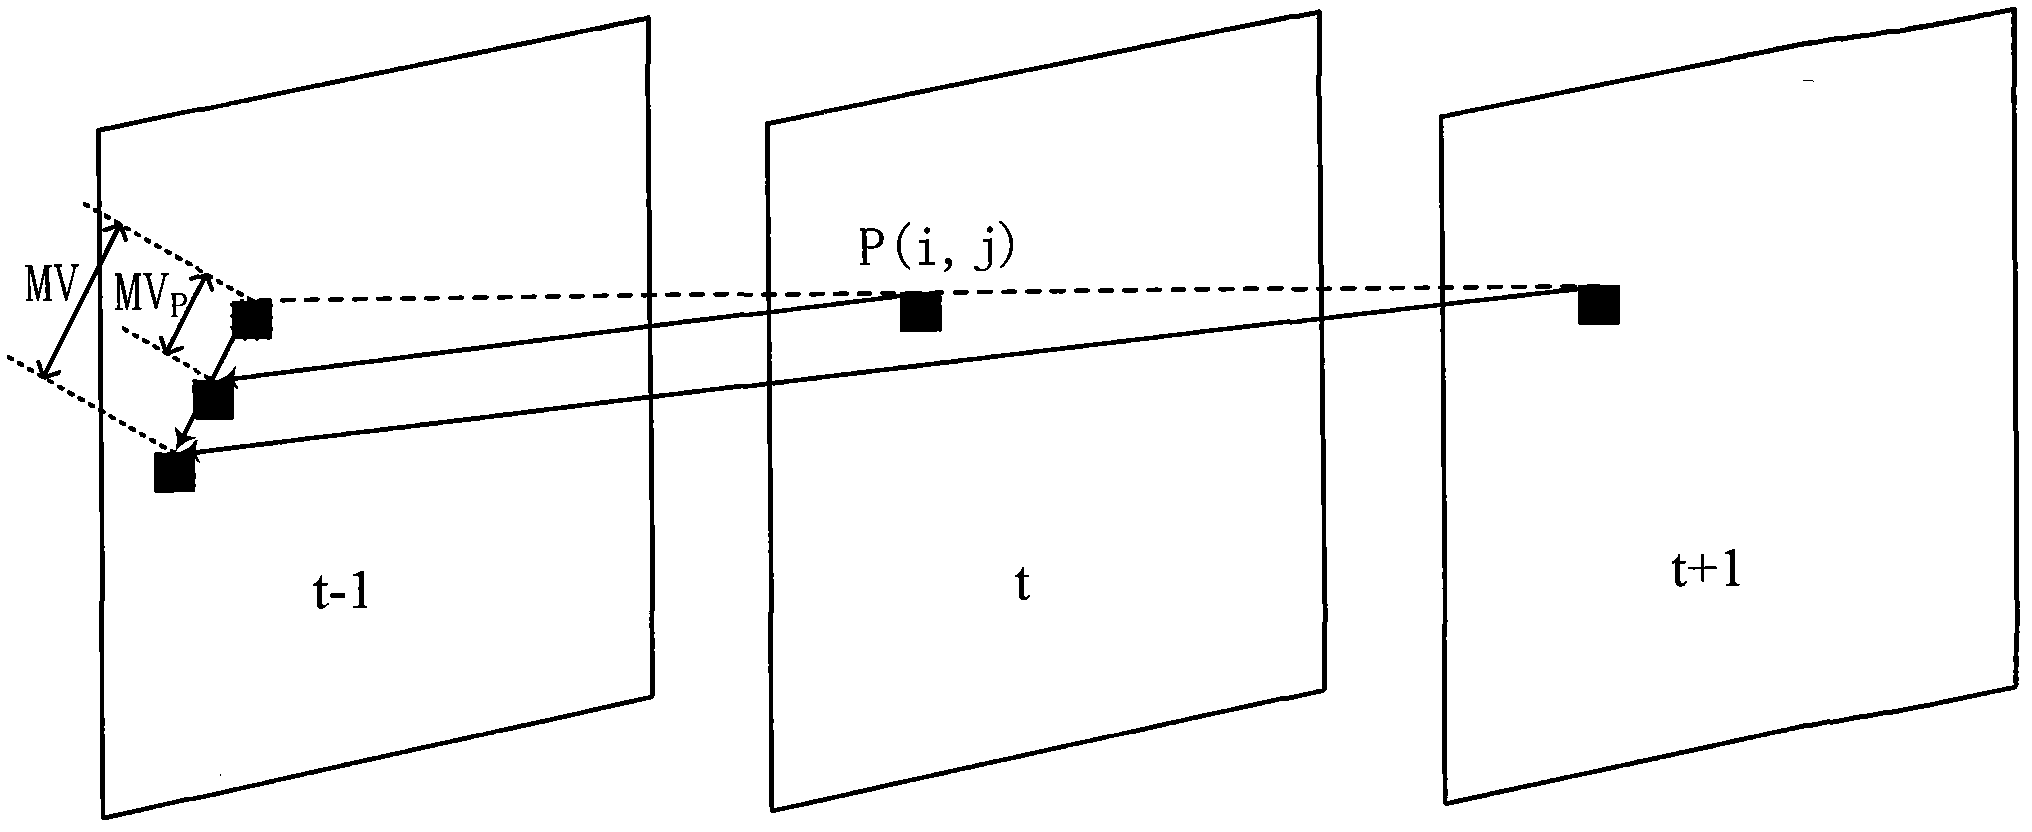 Motion compensation de-interlacing method based on adaptive interpolation